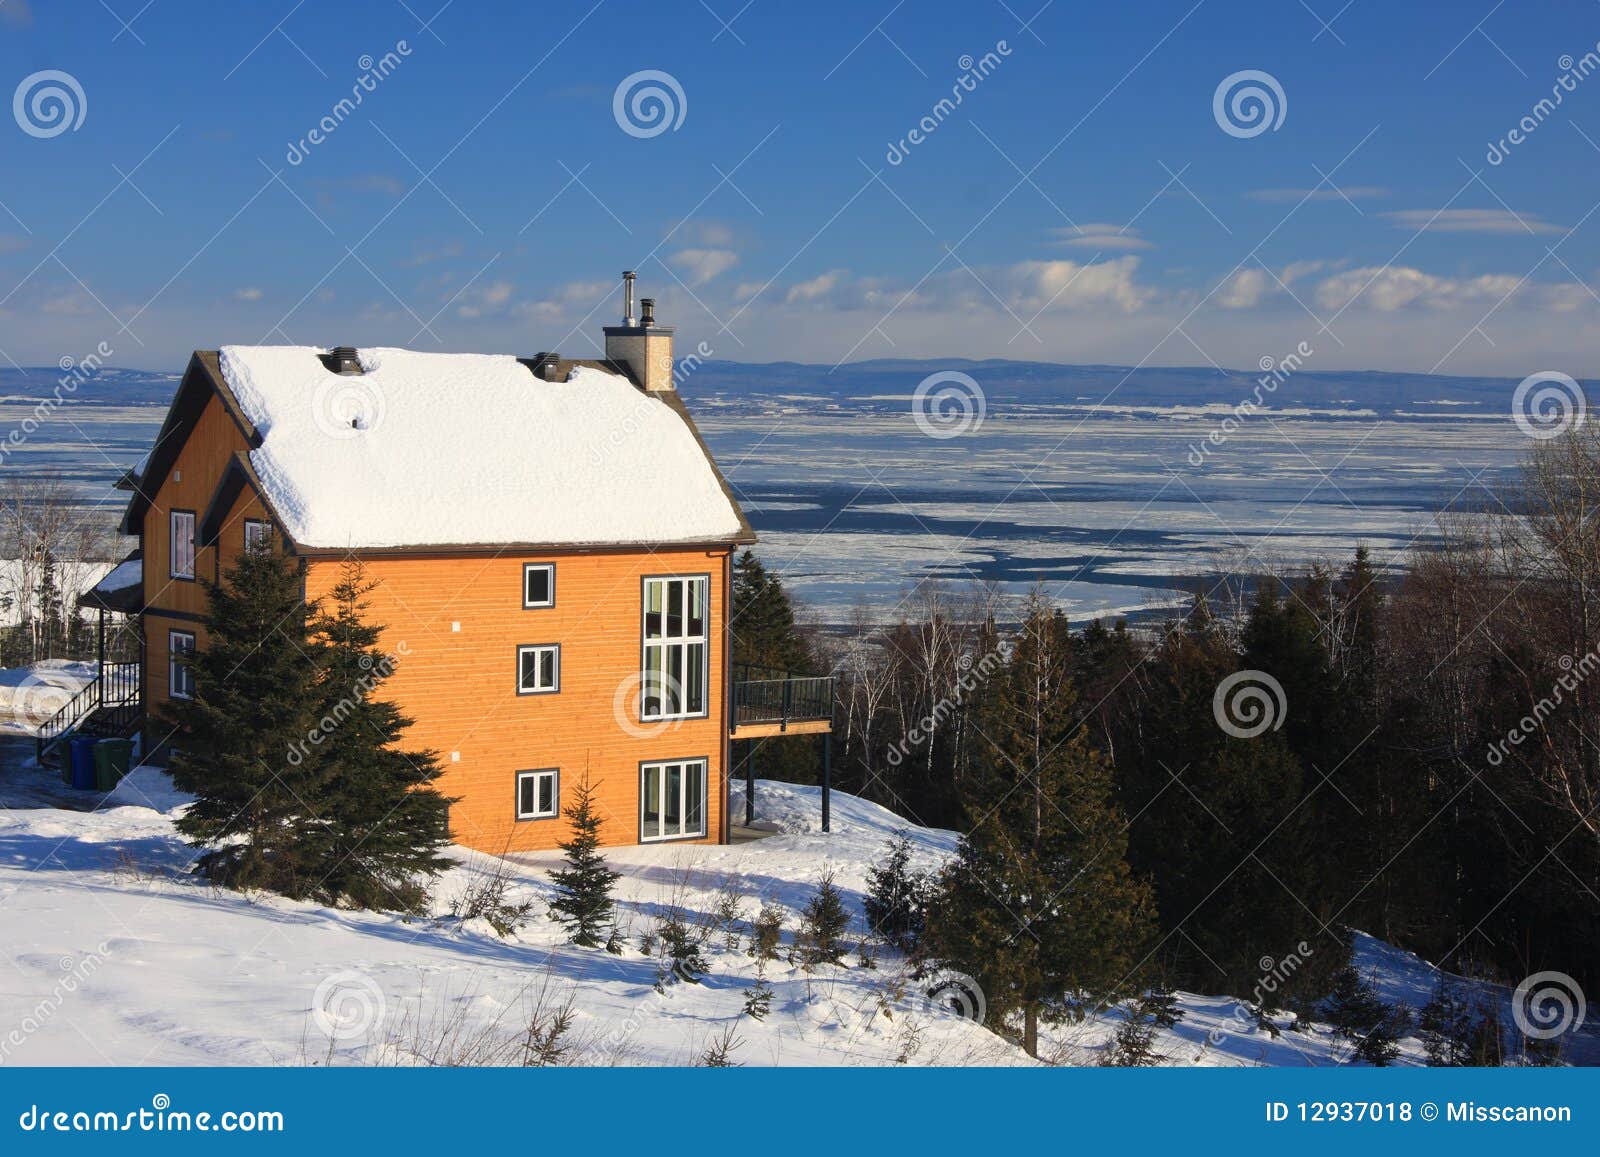 house in wintry landscape